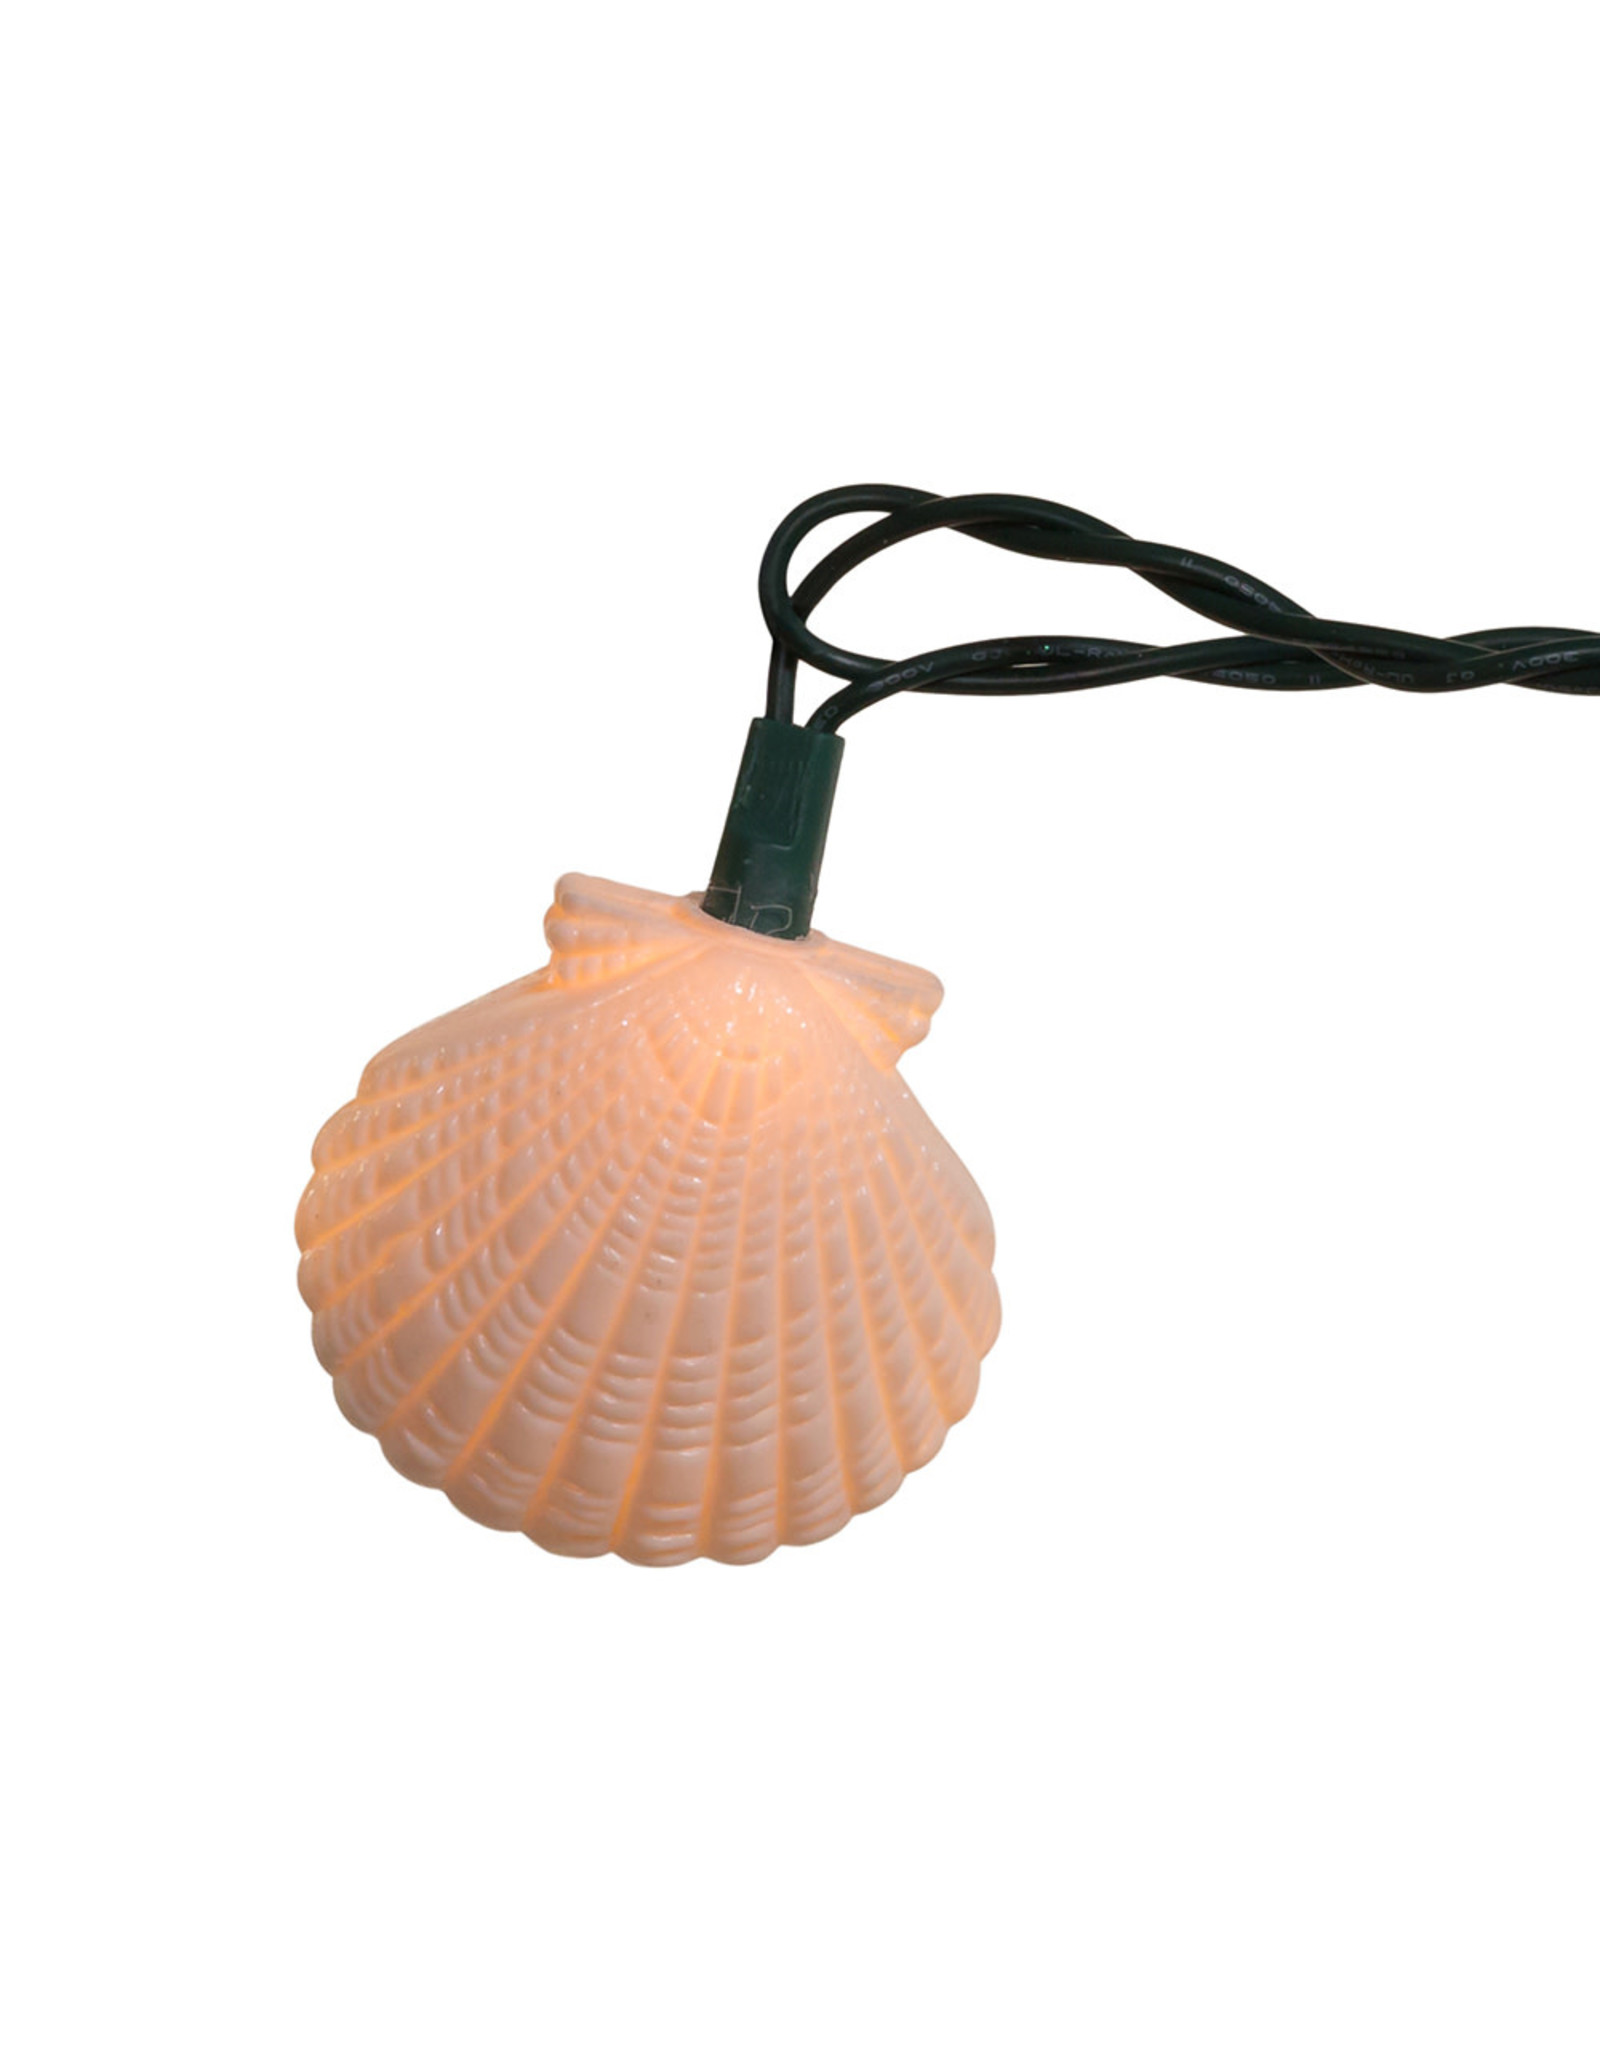 Kurt Adler Shells Novelty String Lights Set With 10 Assorted Shells